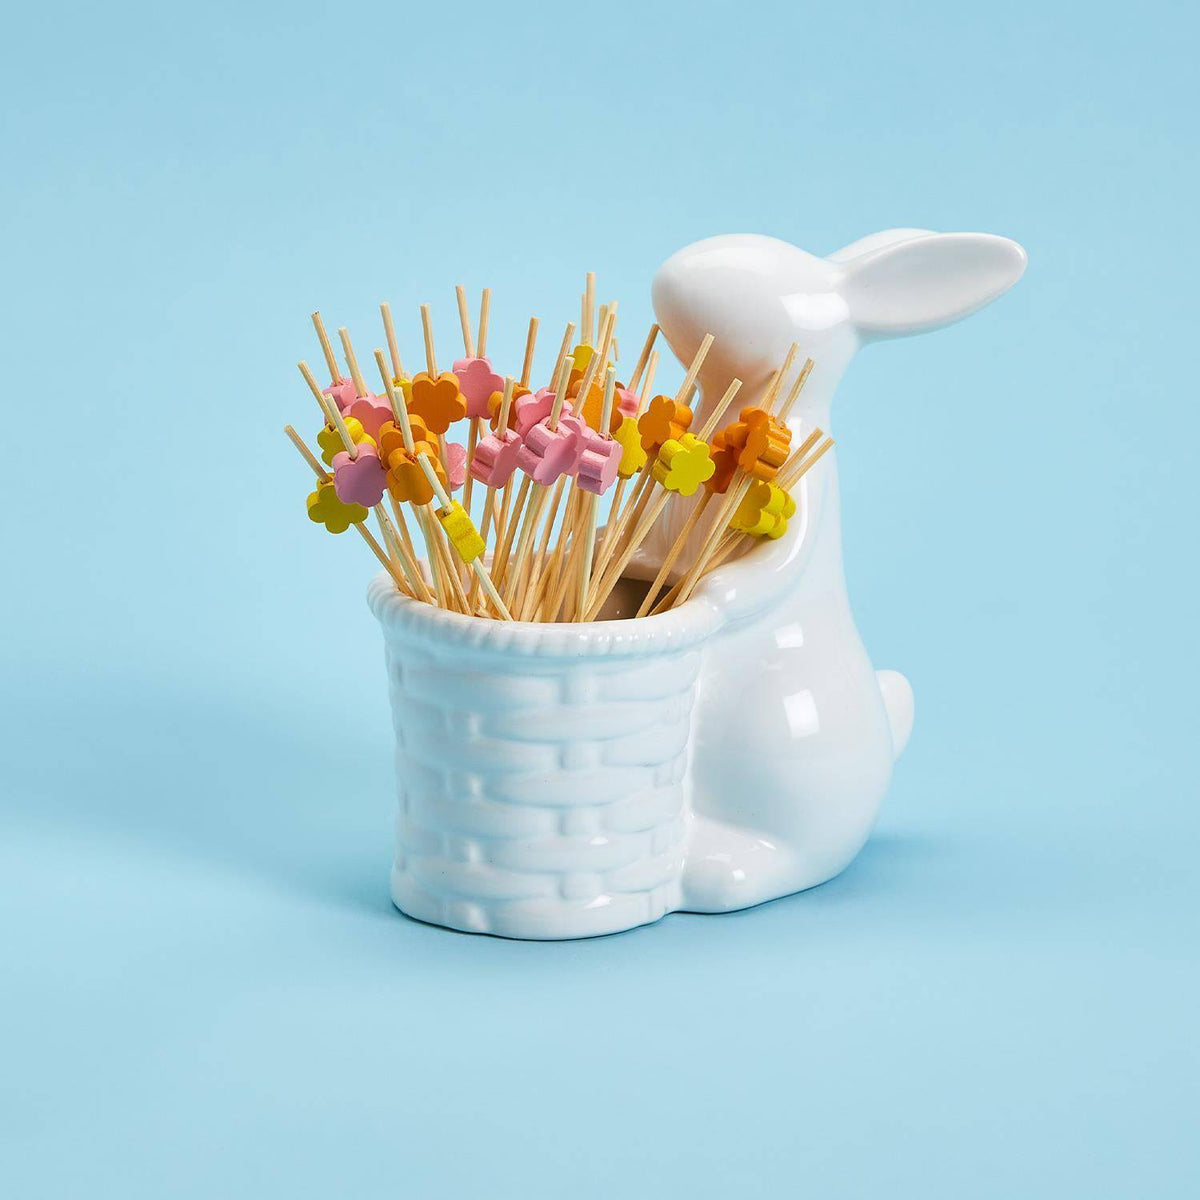 Bunny Pick Holder with Flower Picks - The Preppy Bunny